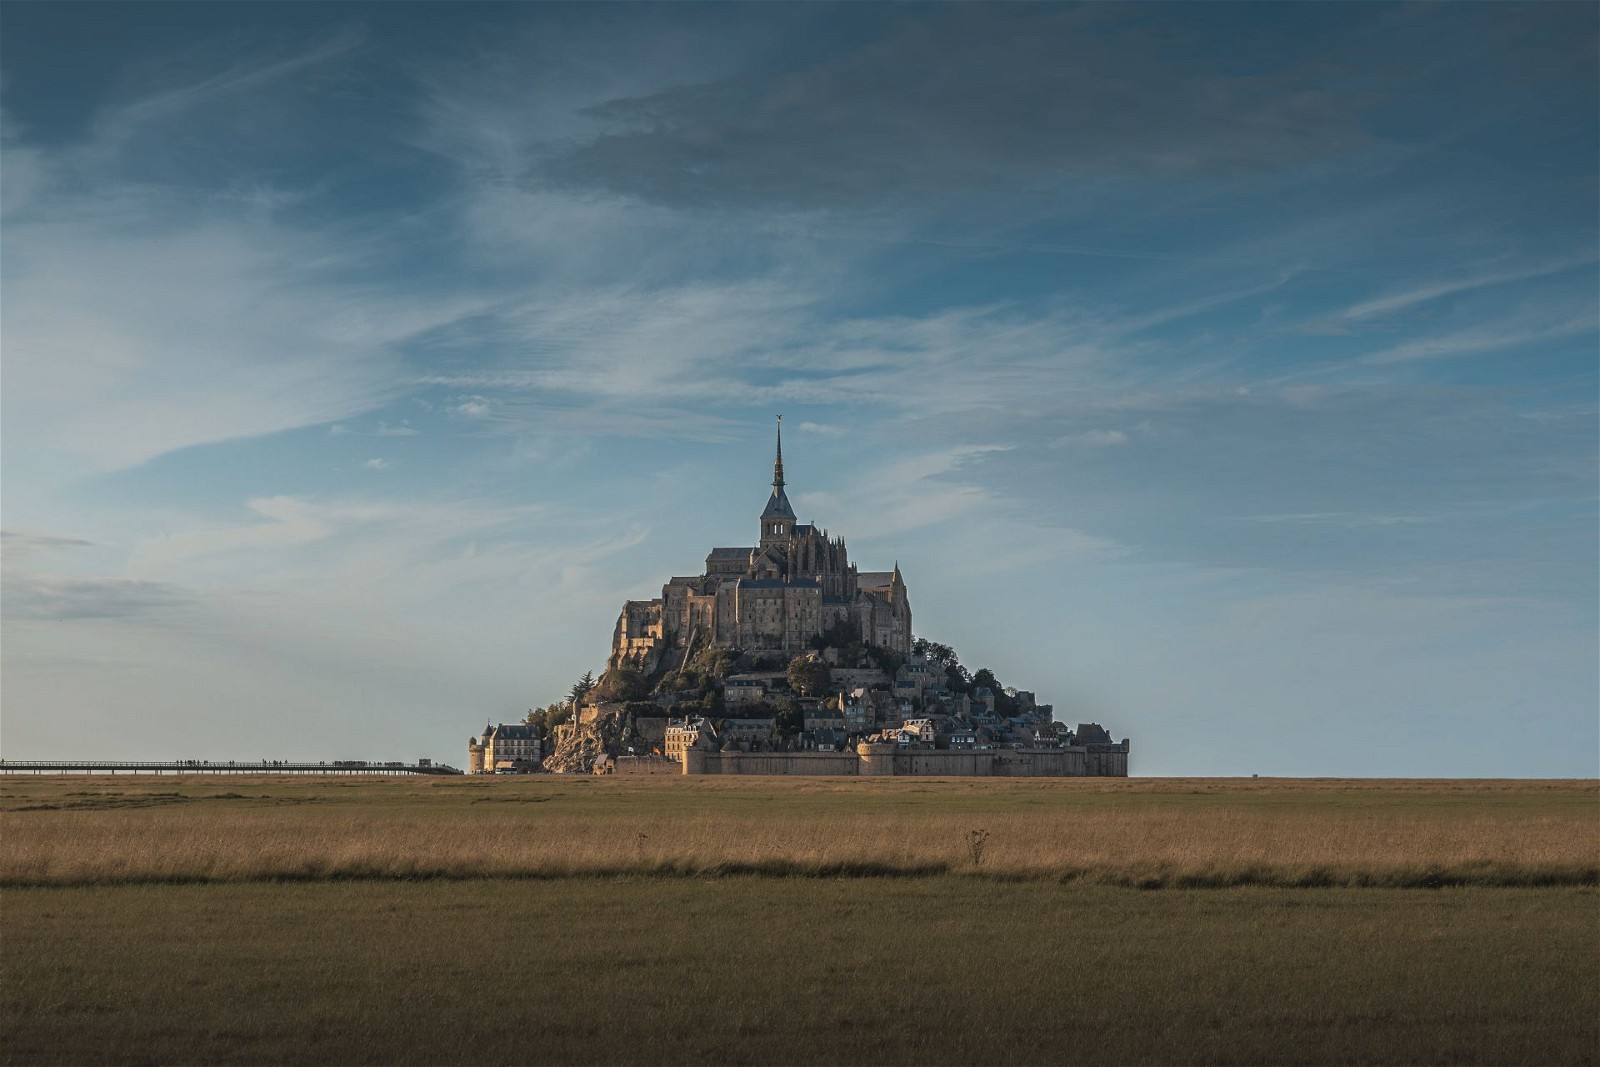 Historical Significance of Mont Saint-Michel: